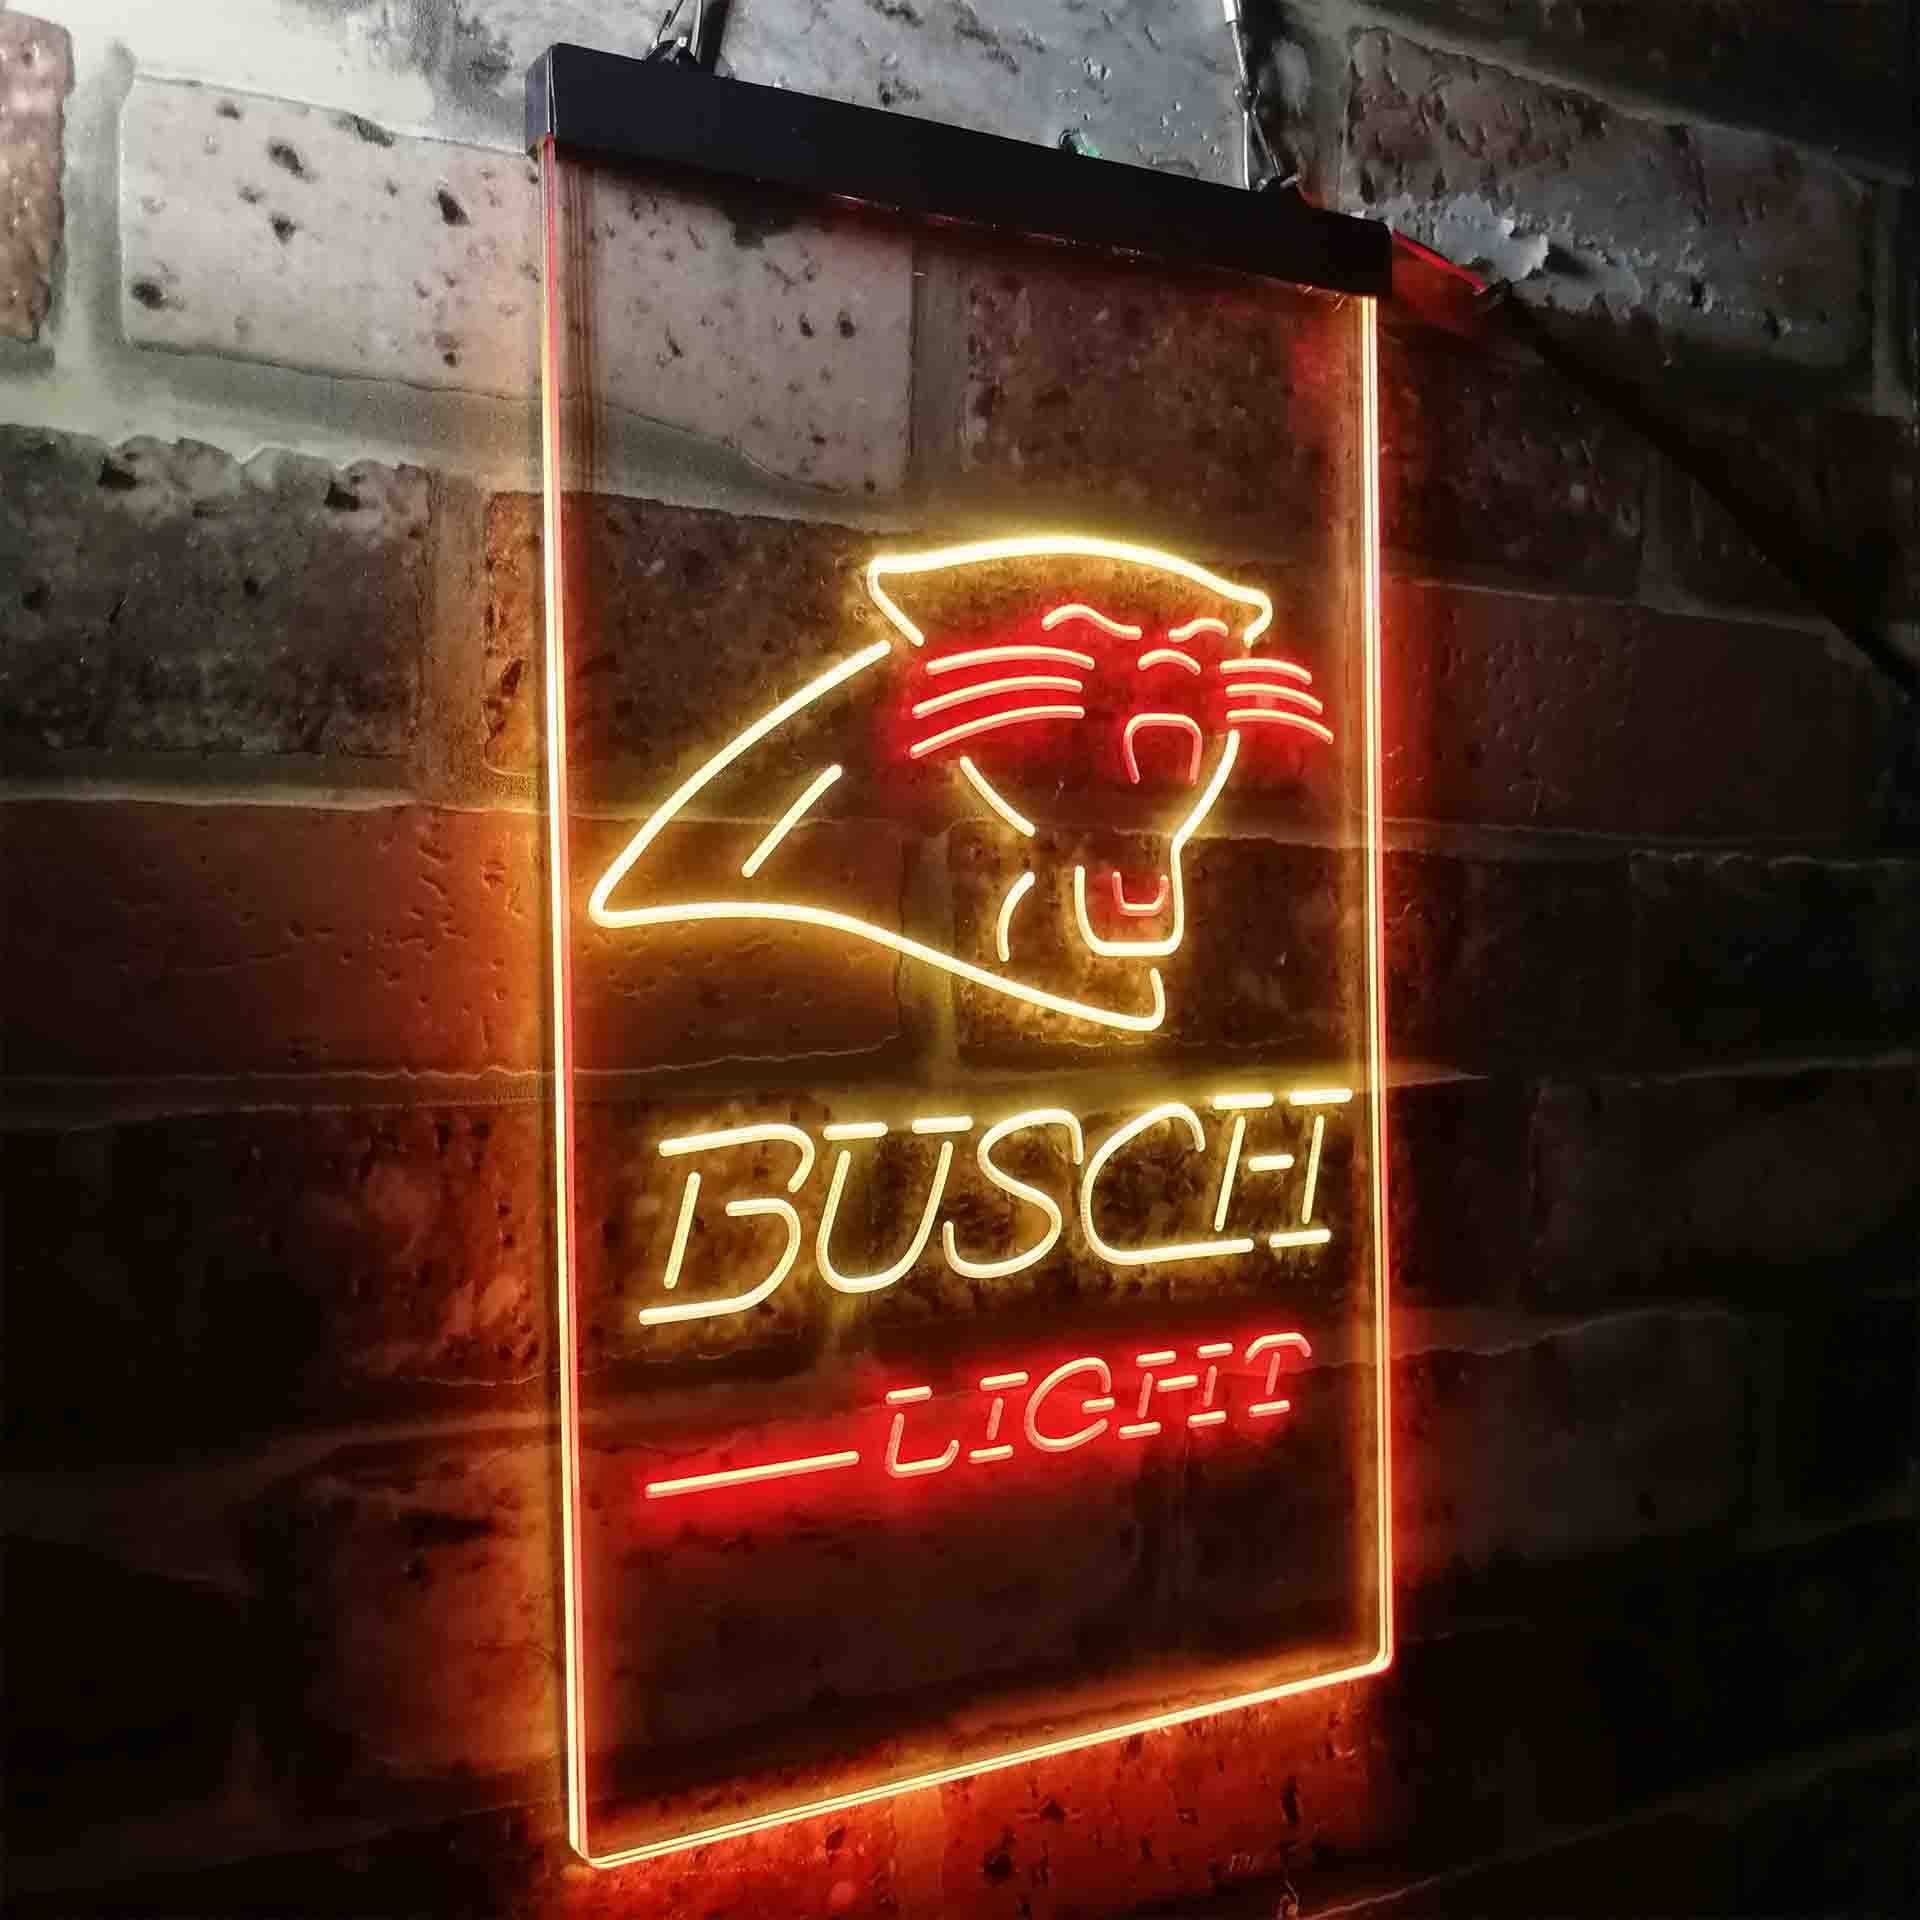 Busch Light Carolina Panthers Neon-Like LED Sign